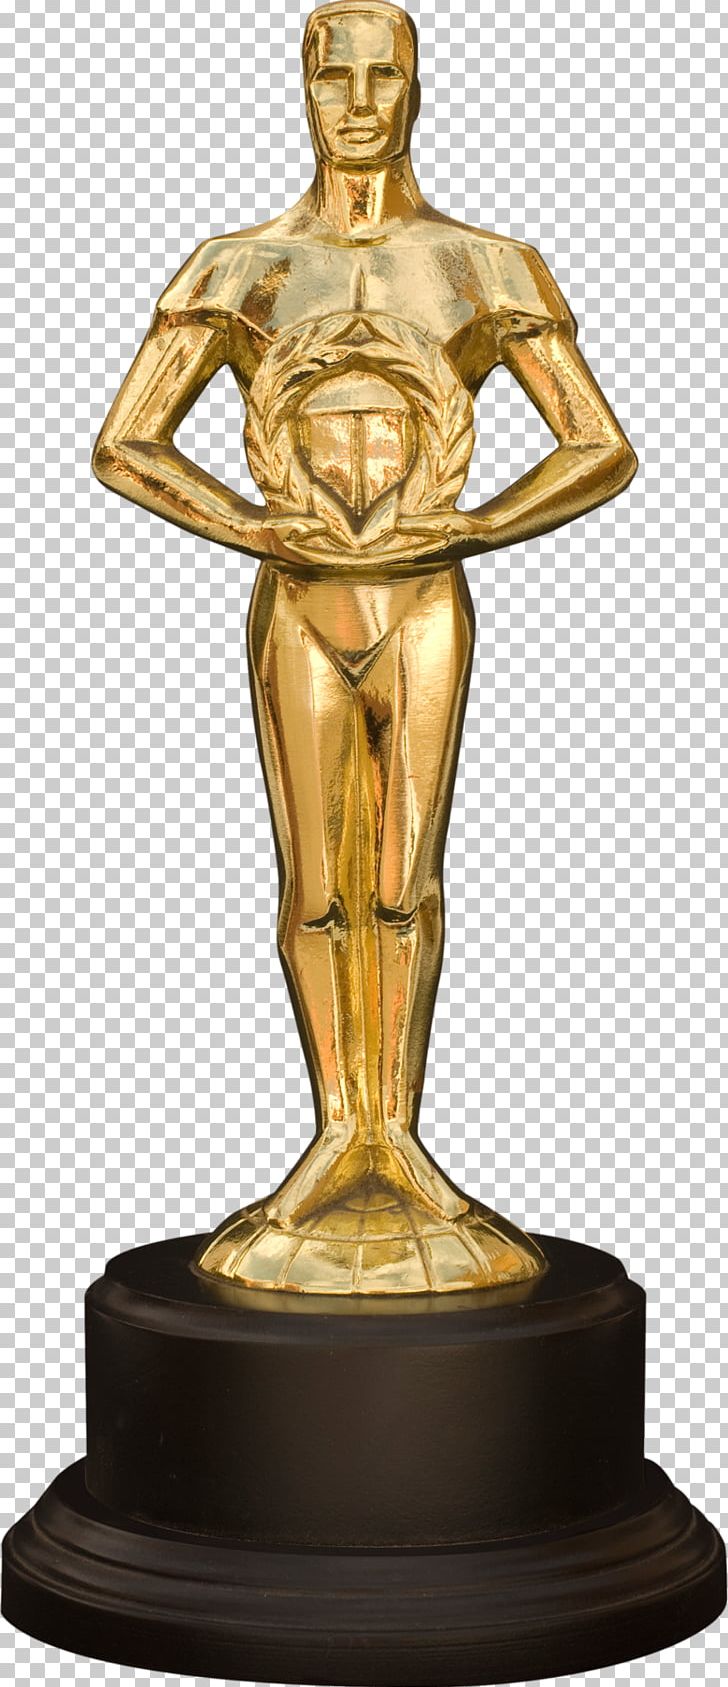 Academy Awards U0420u043eu0441u0442u043eu0432u0430 U0444u0456u0433u0443u0440u0430 PNG, Clipart, Academy Juvenile Award, Award, Award Background, Award Certificate, Awards Free PNG Download